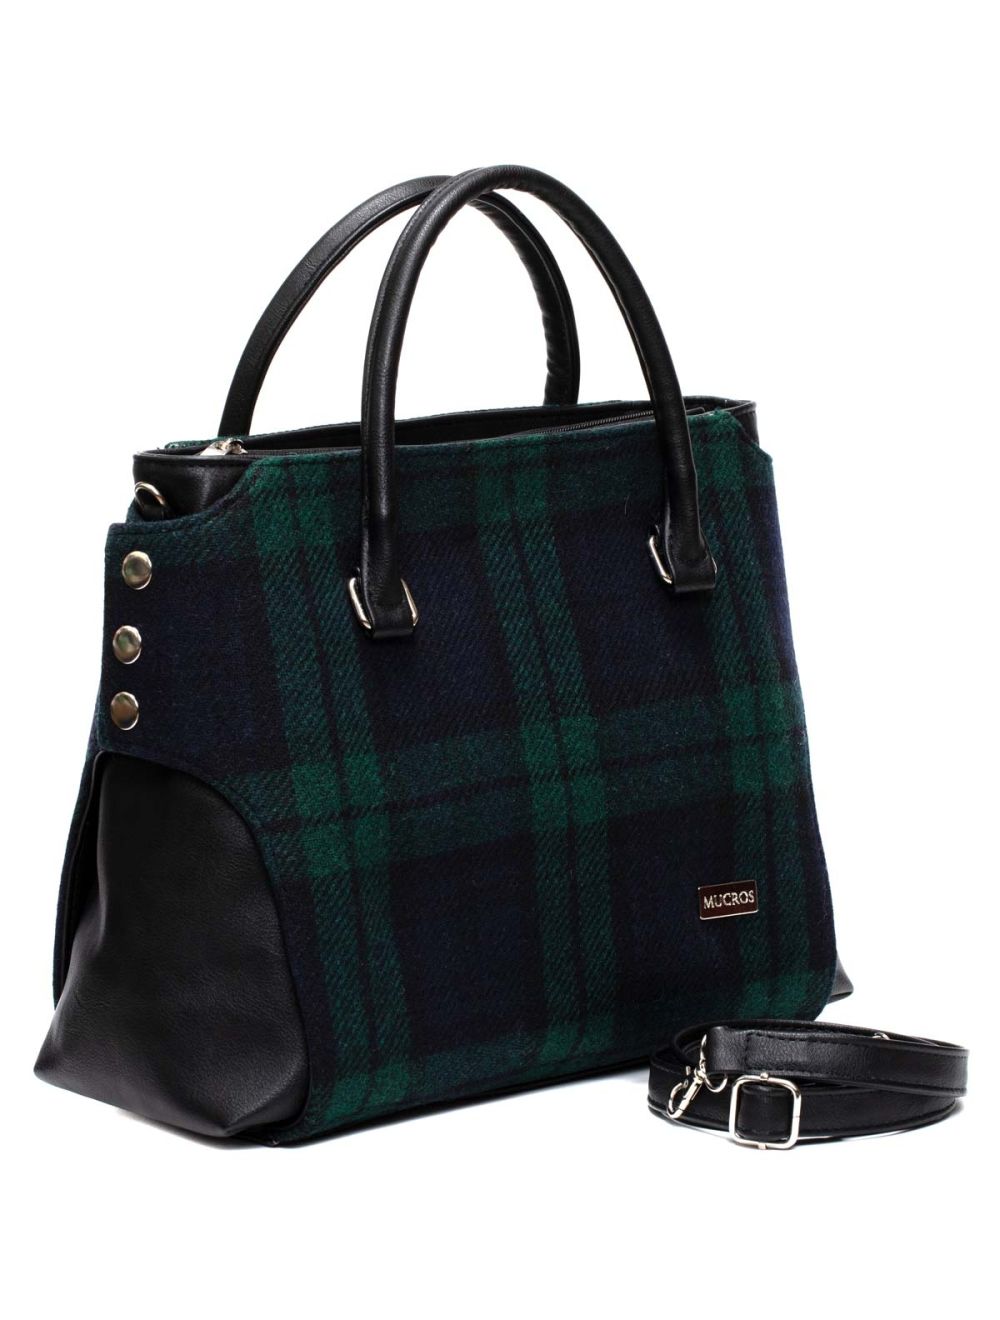 Burberry Women's New In | Burberry® Official | Bags, Burberry bag, Burberry  handbags